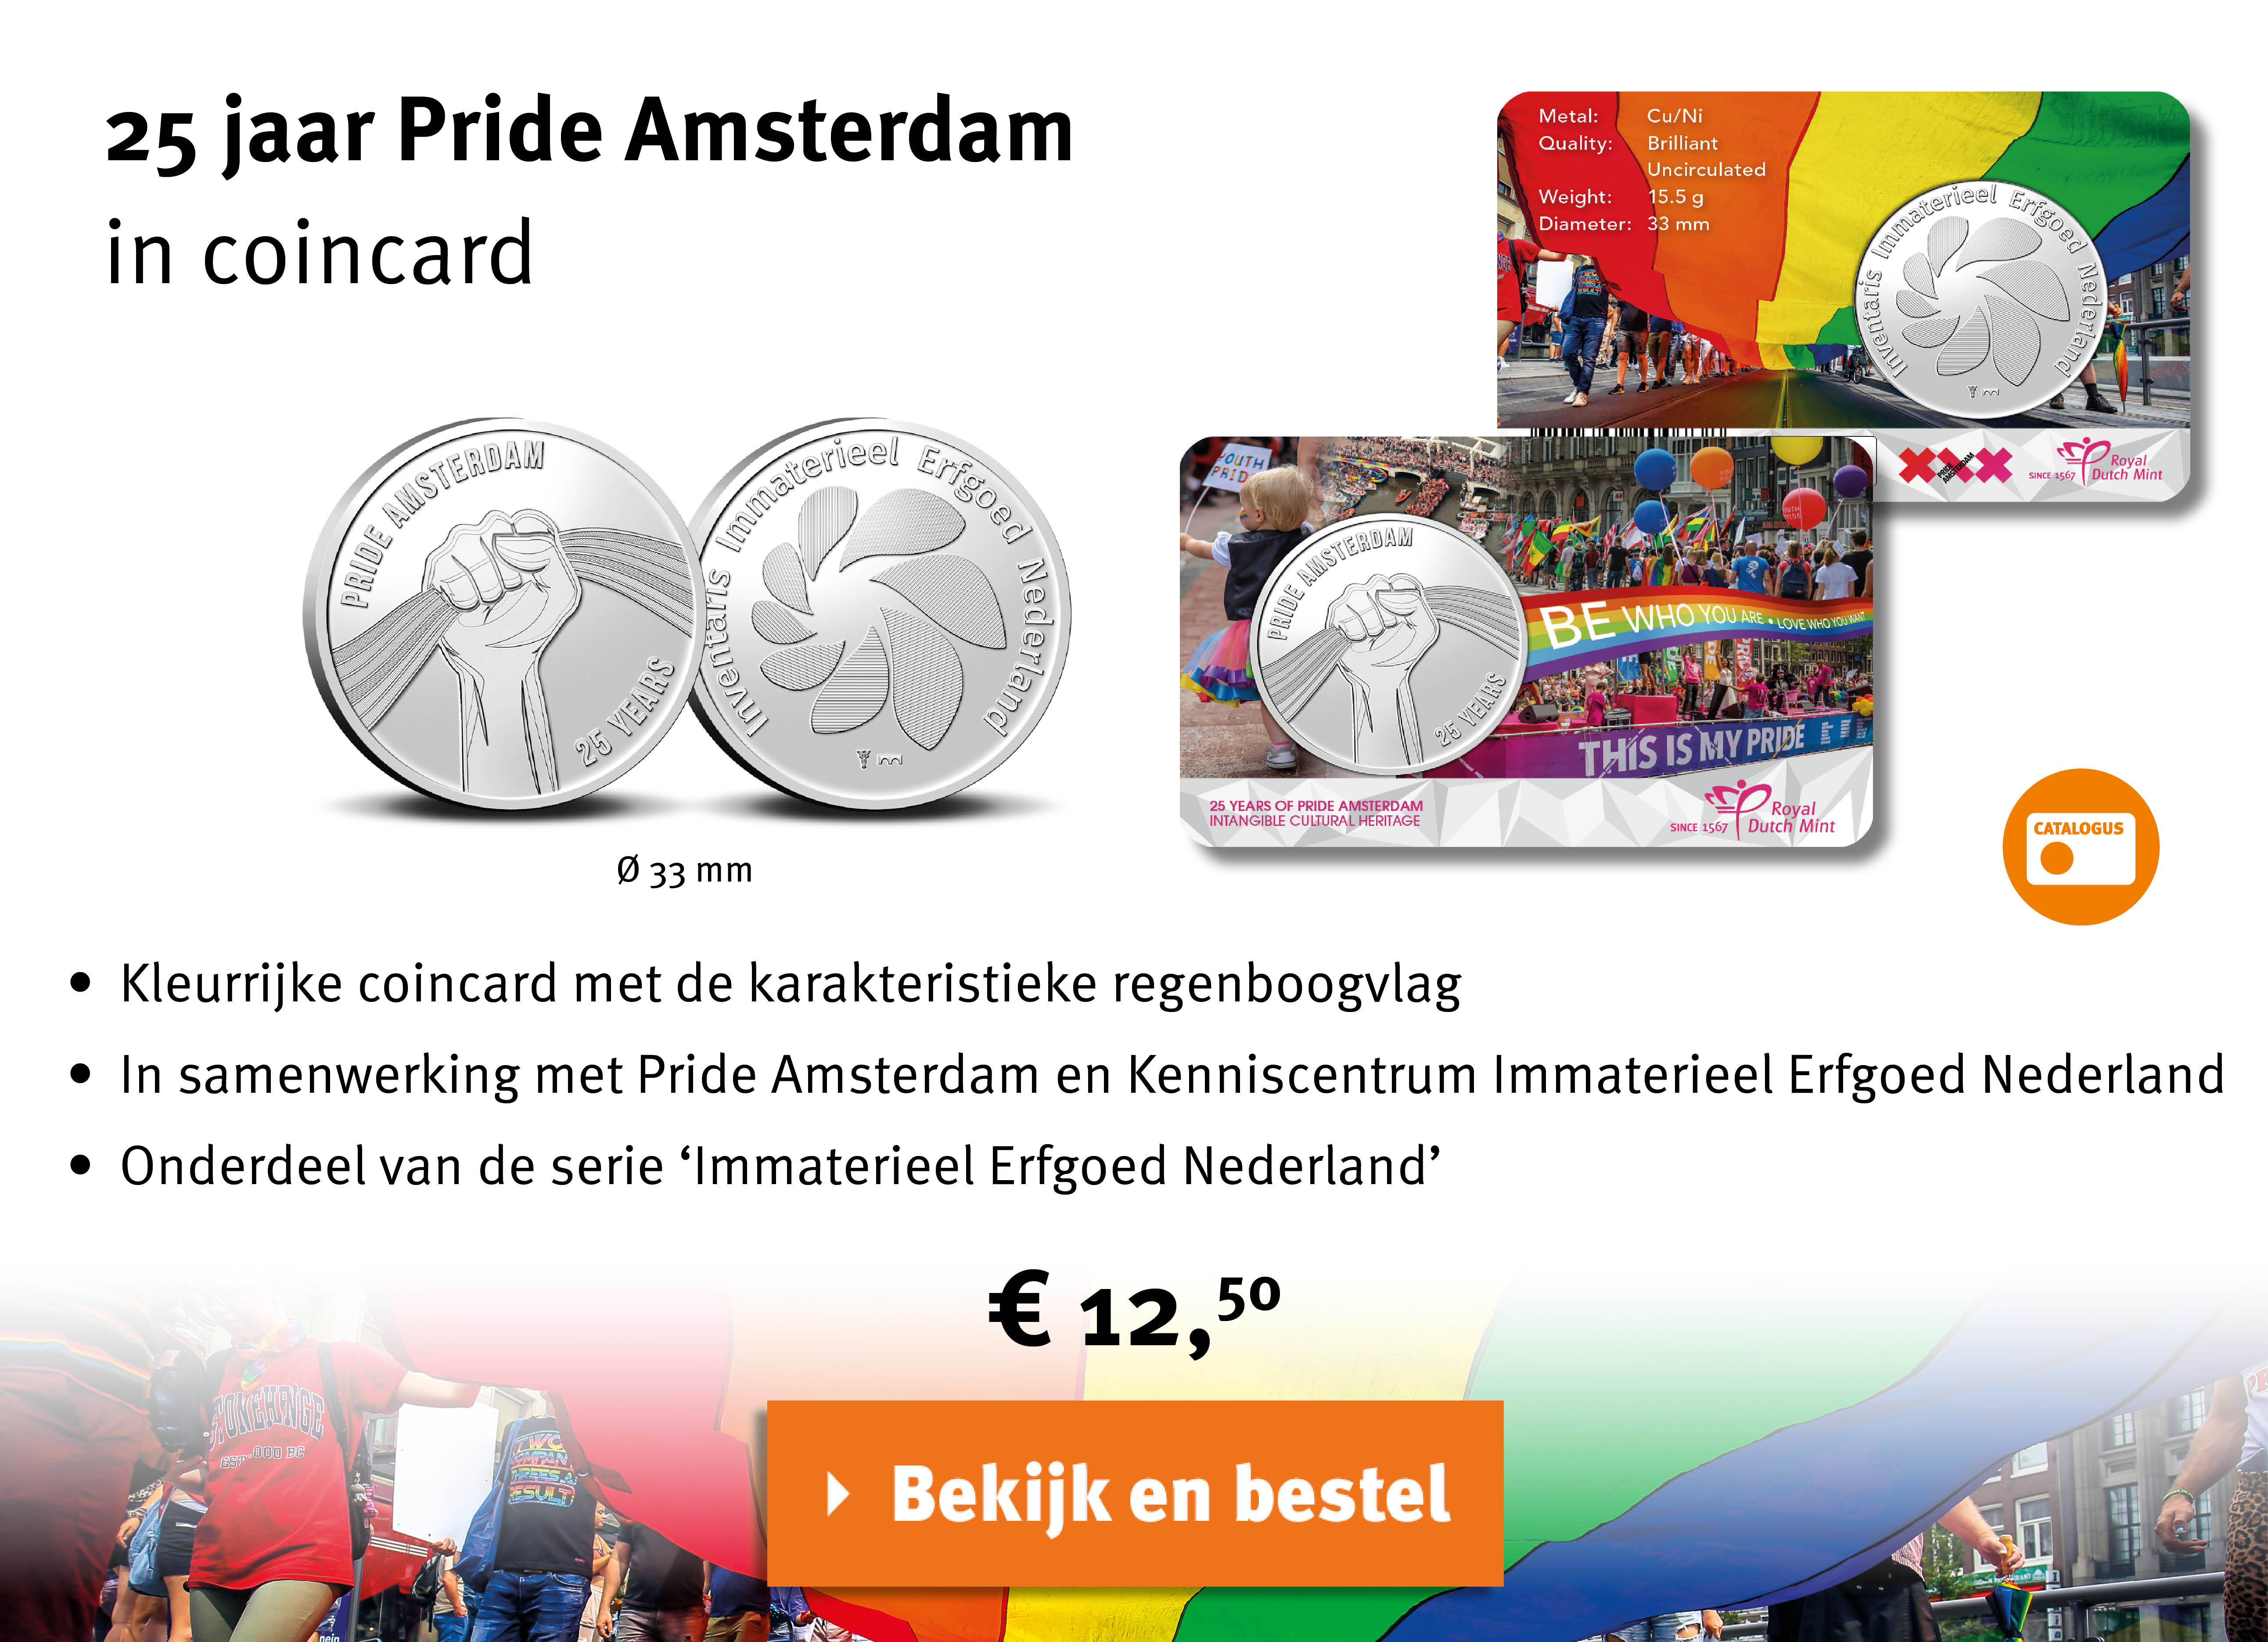 Bekijk en bestel: 25 jaar Pride Amsterdam in coincard